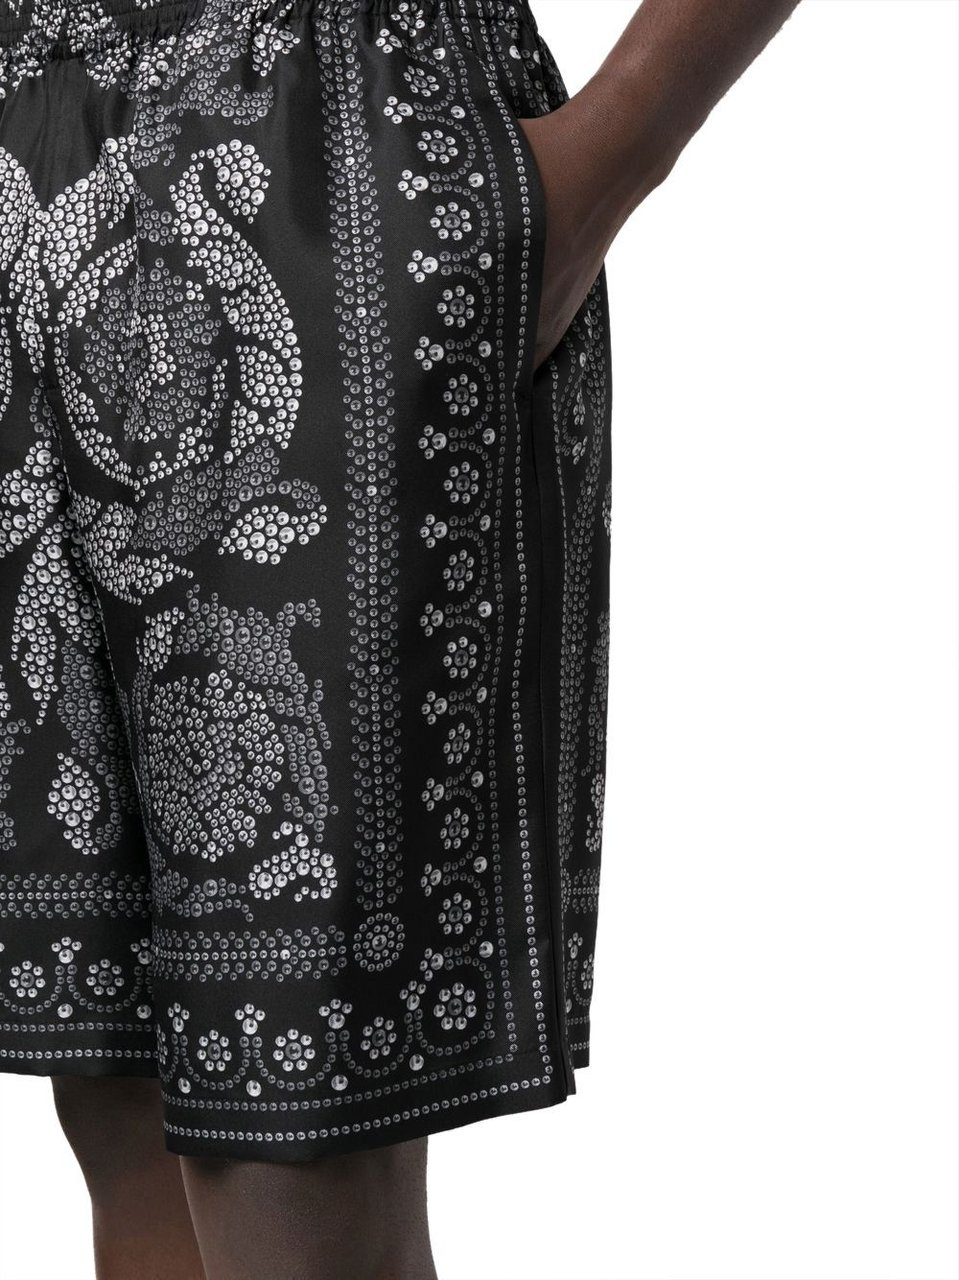 Versace Shorts Black Black Zwart